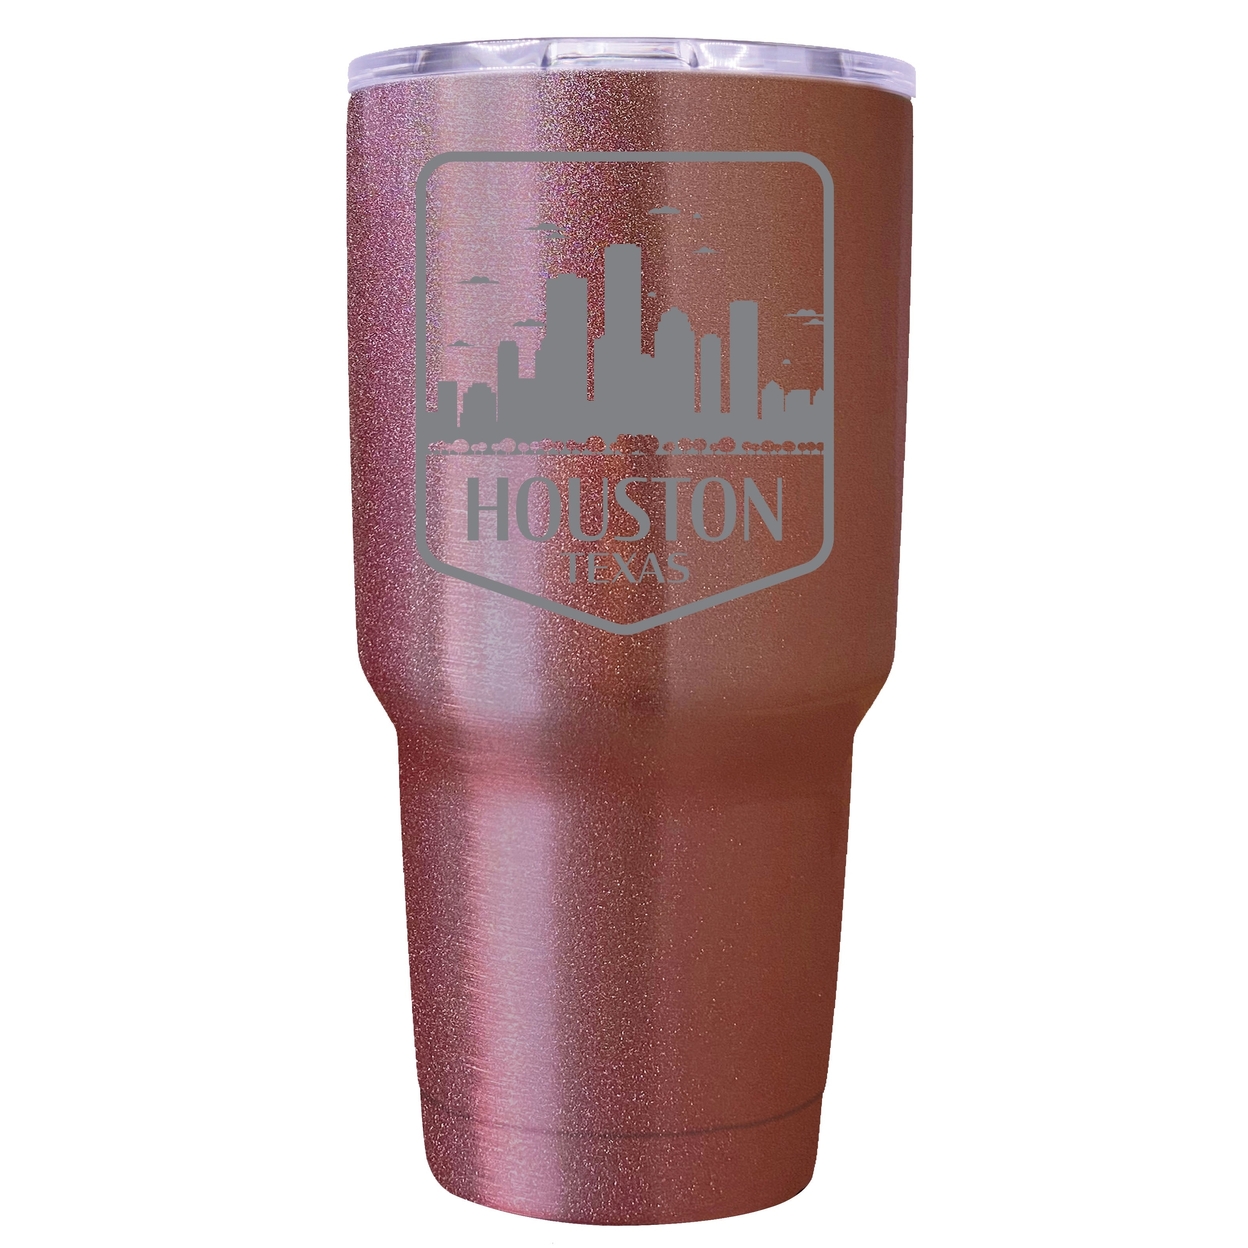 Houston Texas Souvenir 24 Oz Engraved Insulated Stainless Steel Tumbler - Rose Gold,,Single Unit